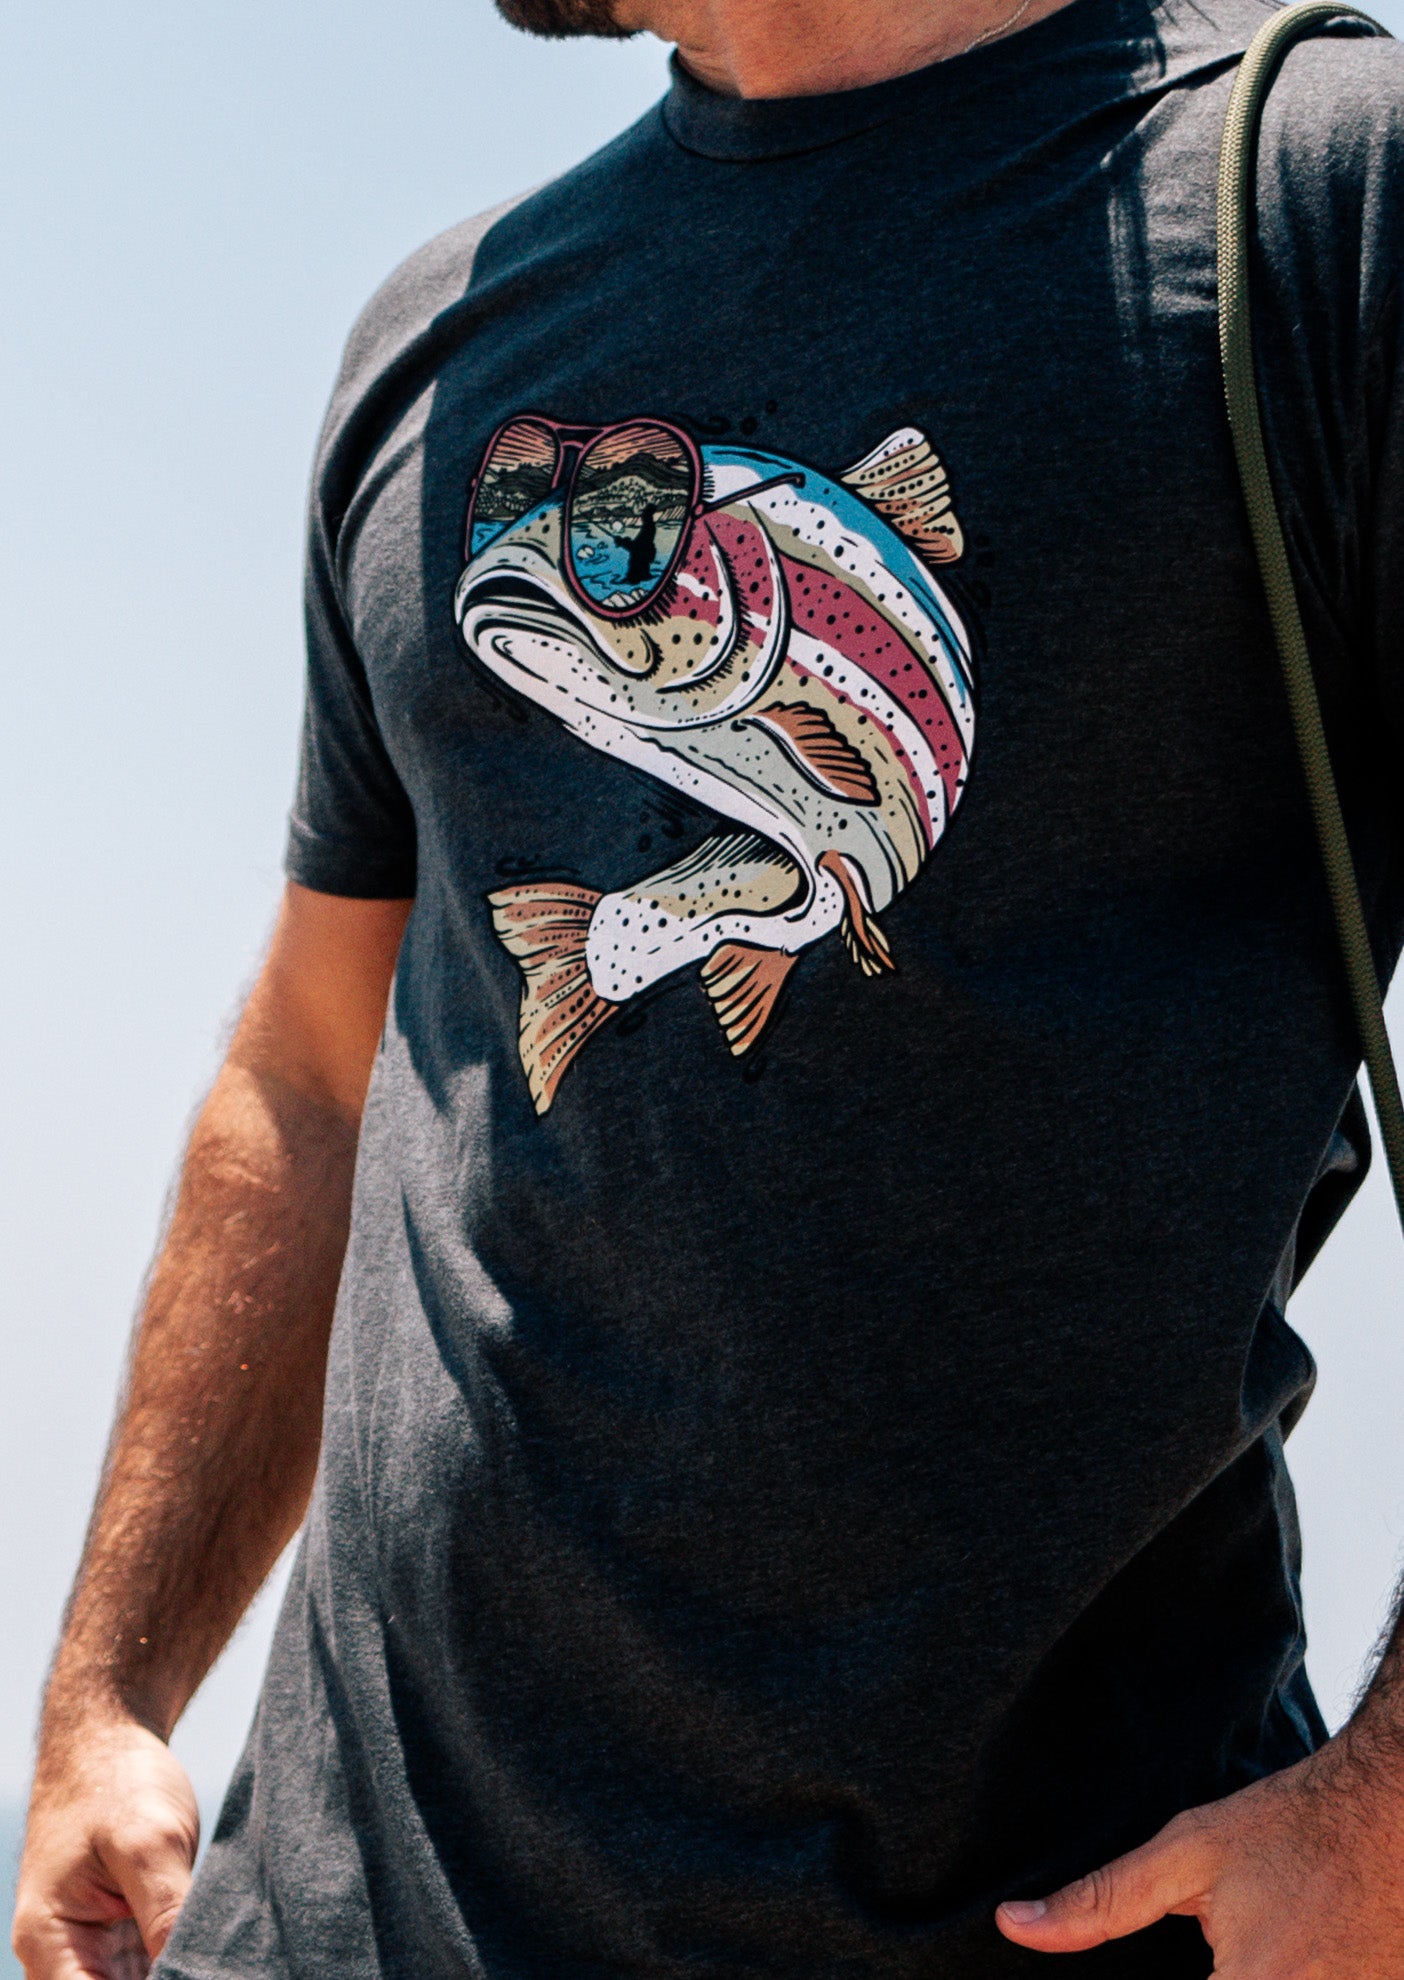 Miami Vice Rainbow Trout T-Shirt